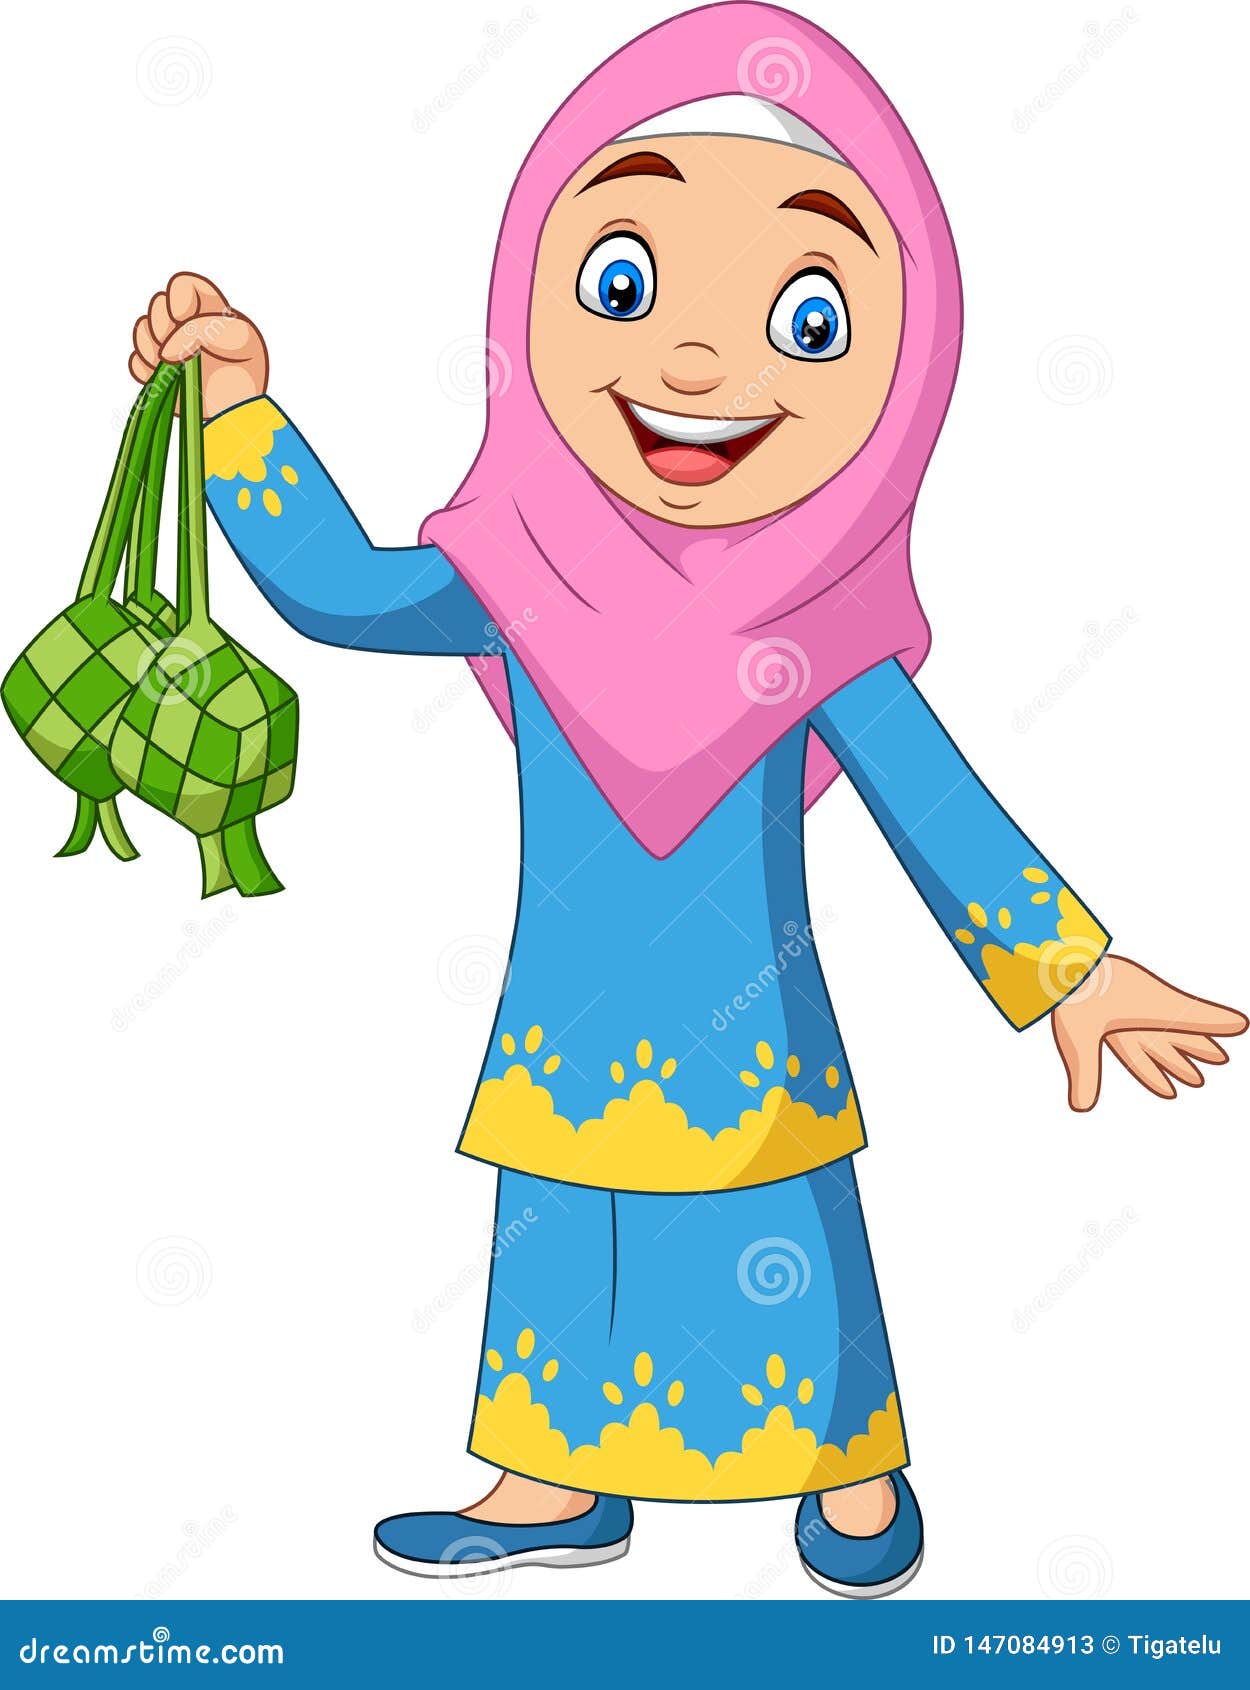 A Cute Muslim Girl Cartoon Illustration | CartoonDealer.com #84719554